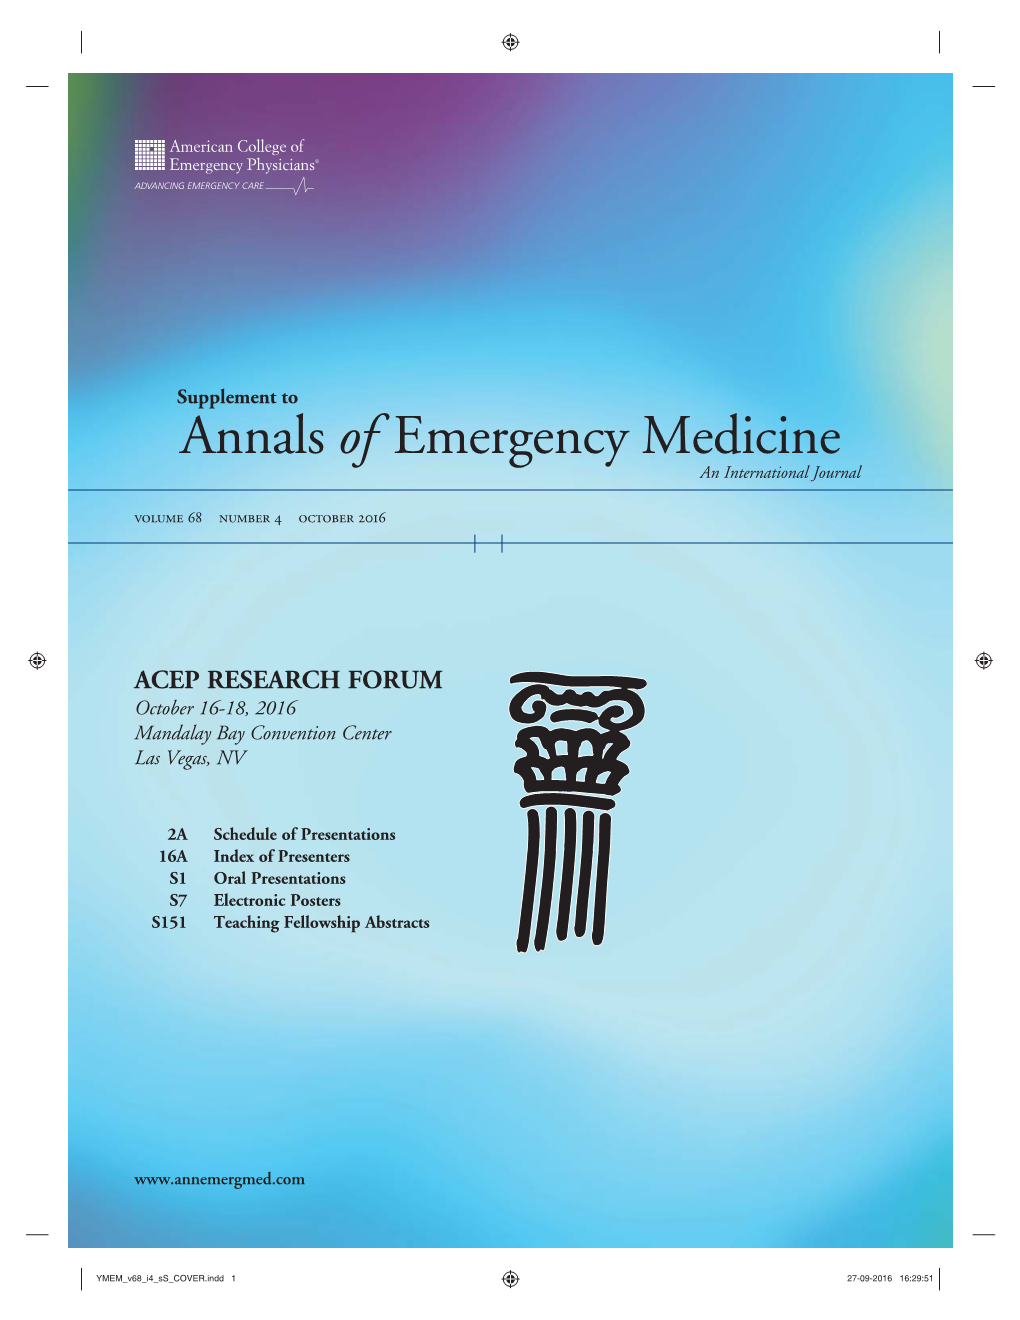 Patient Attitudes Towards Emergency Department Medical Scribes